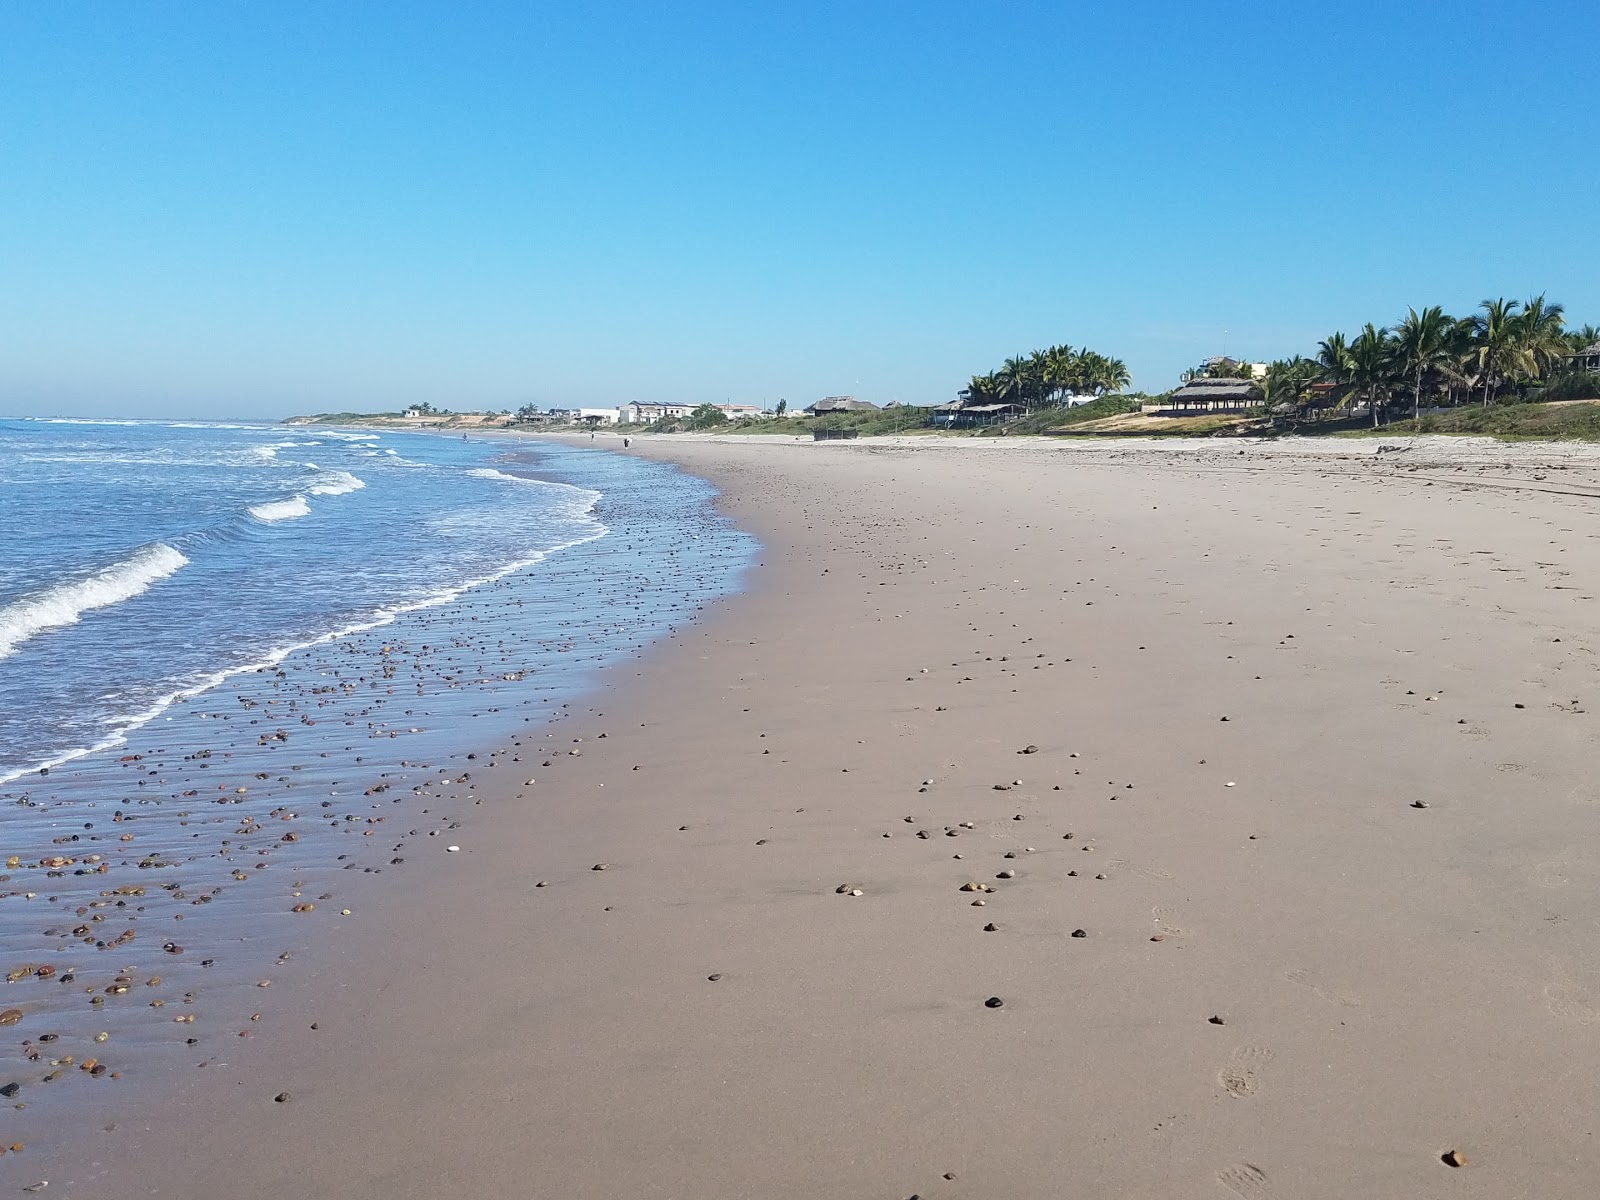 Fotografie cu Celestino beach cu nivelul de curățenie in medie